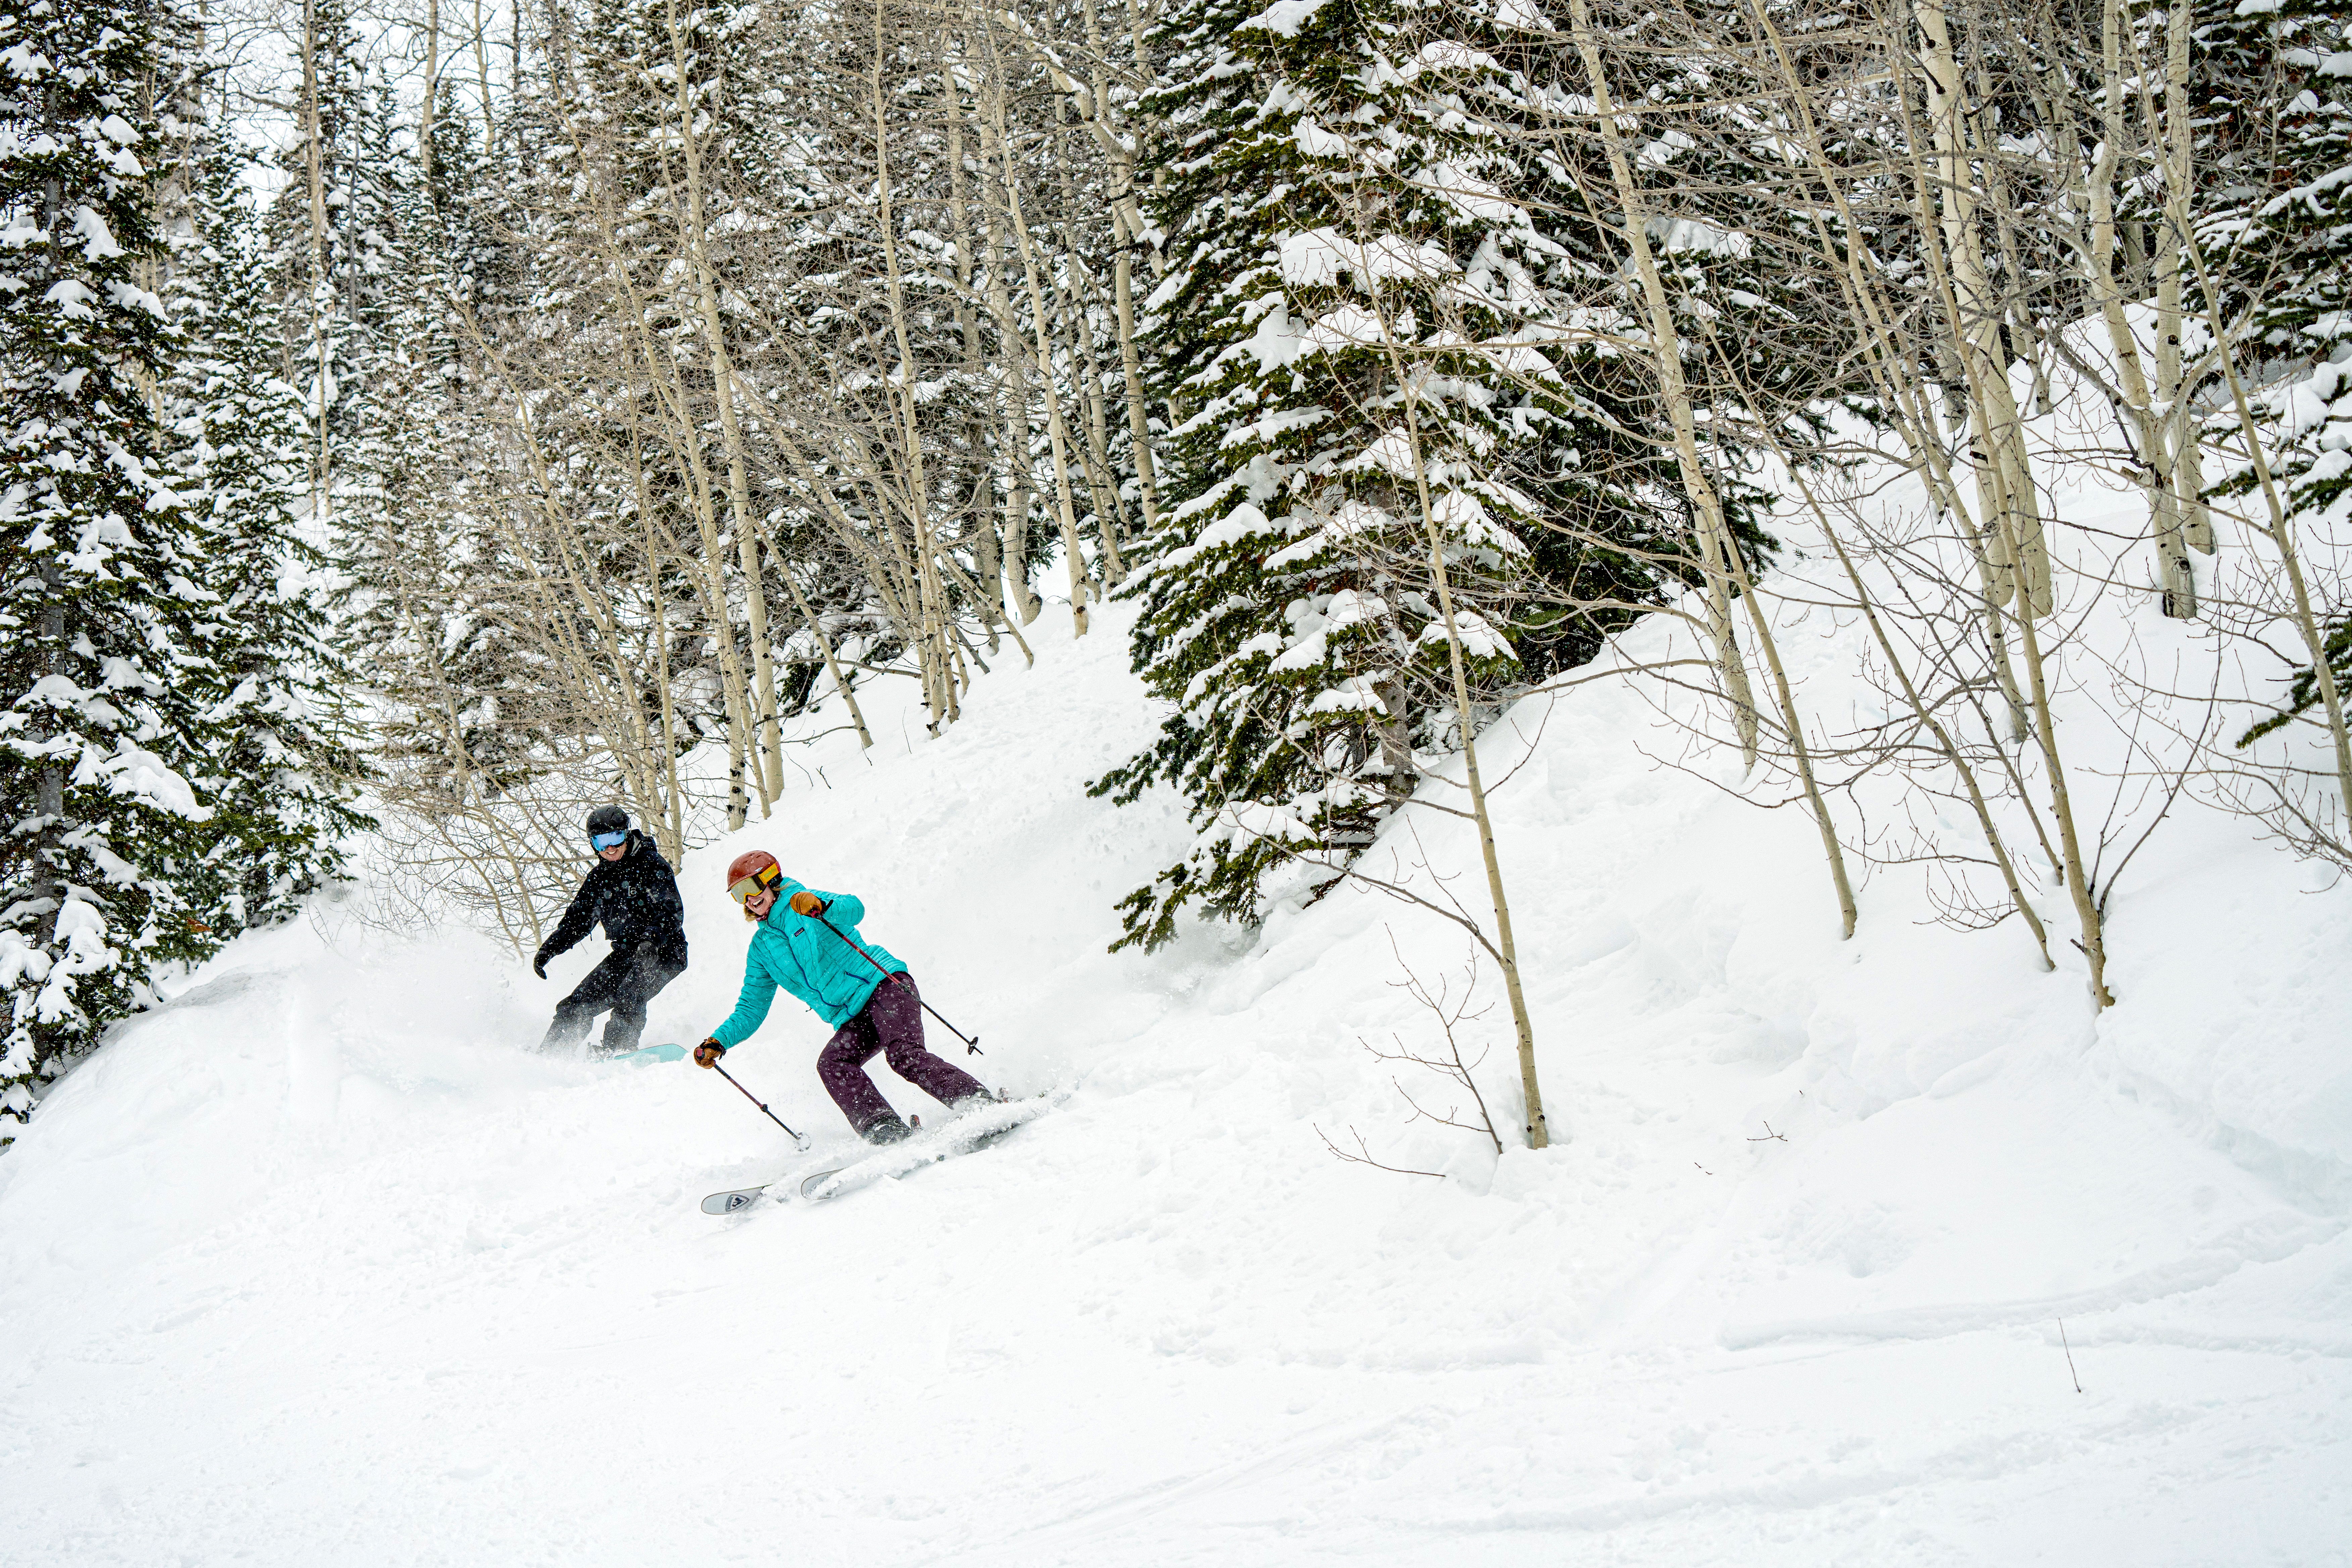 A skier and snowboarder enjoy the slopes at Powderhorn Mountain Resort. Photo courtesy: Powderhorn Mountain Resort.